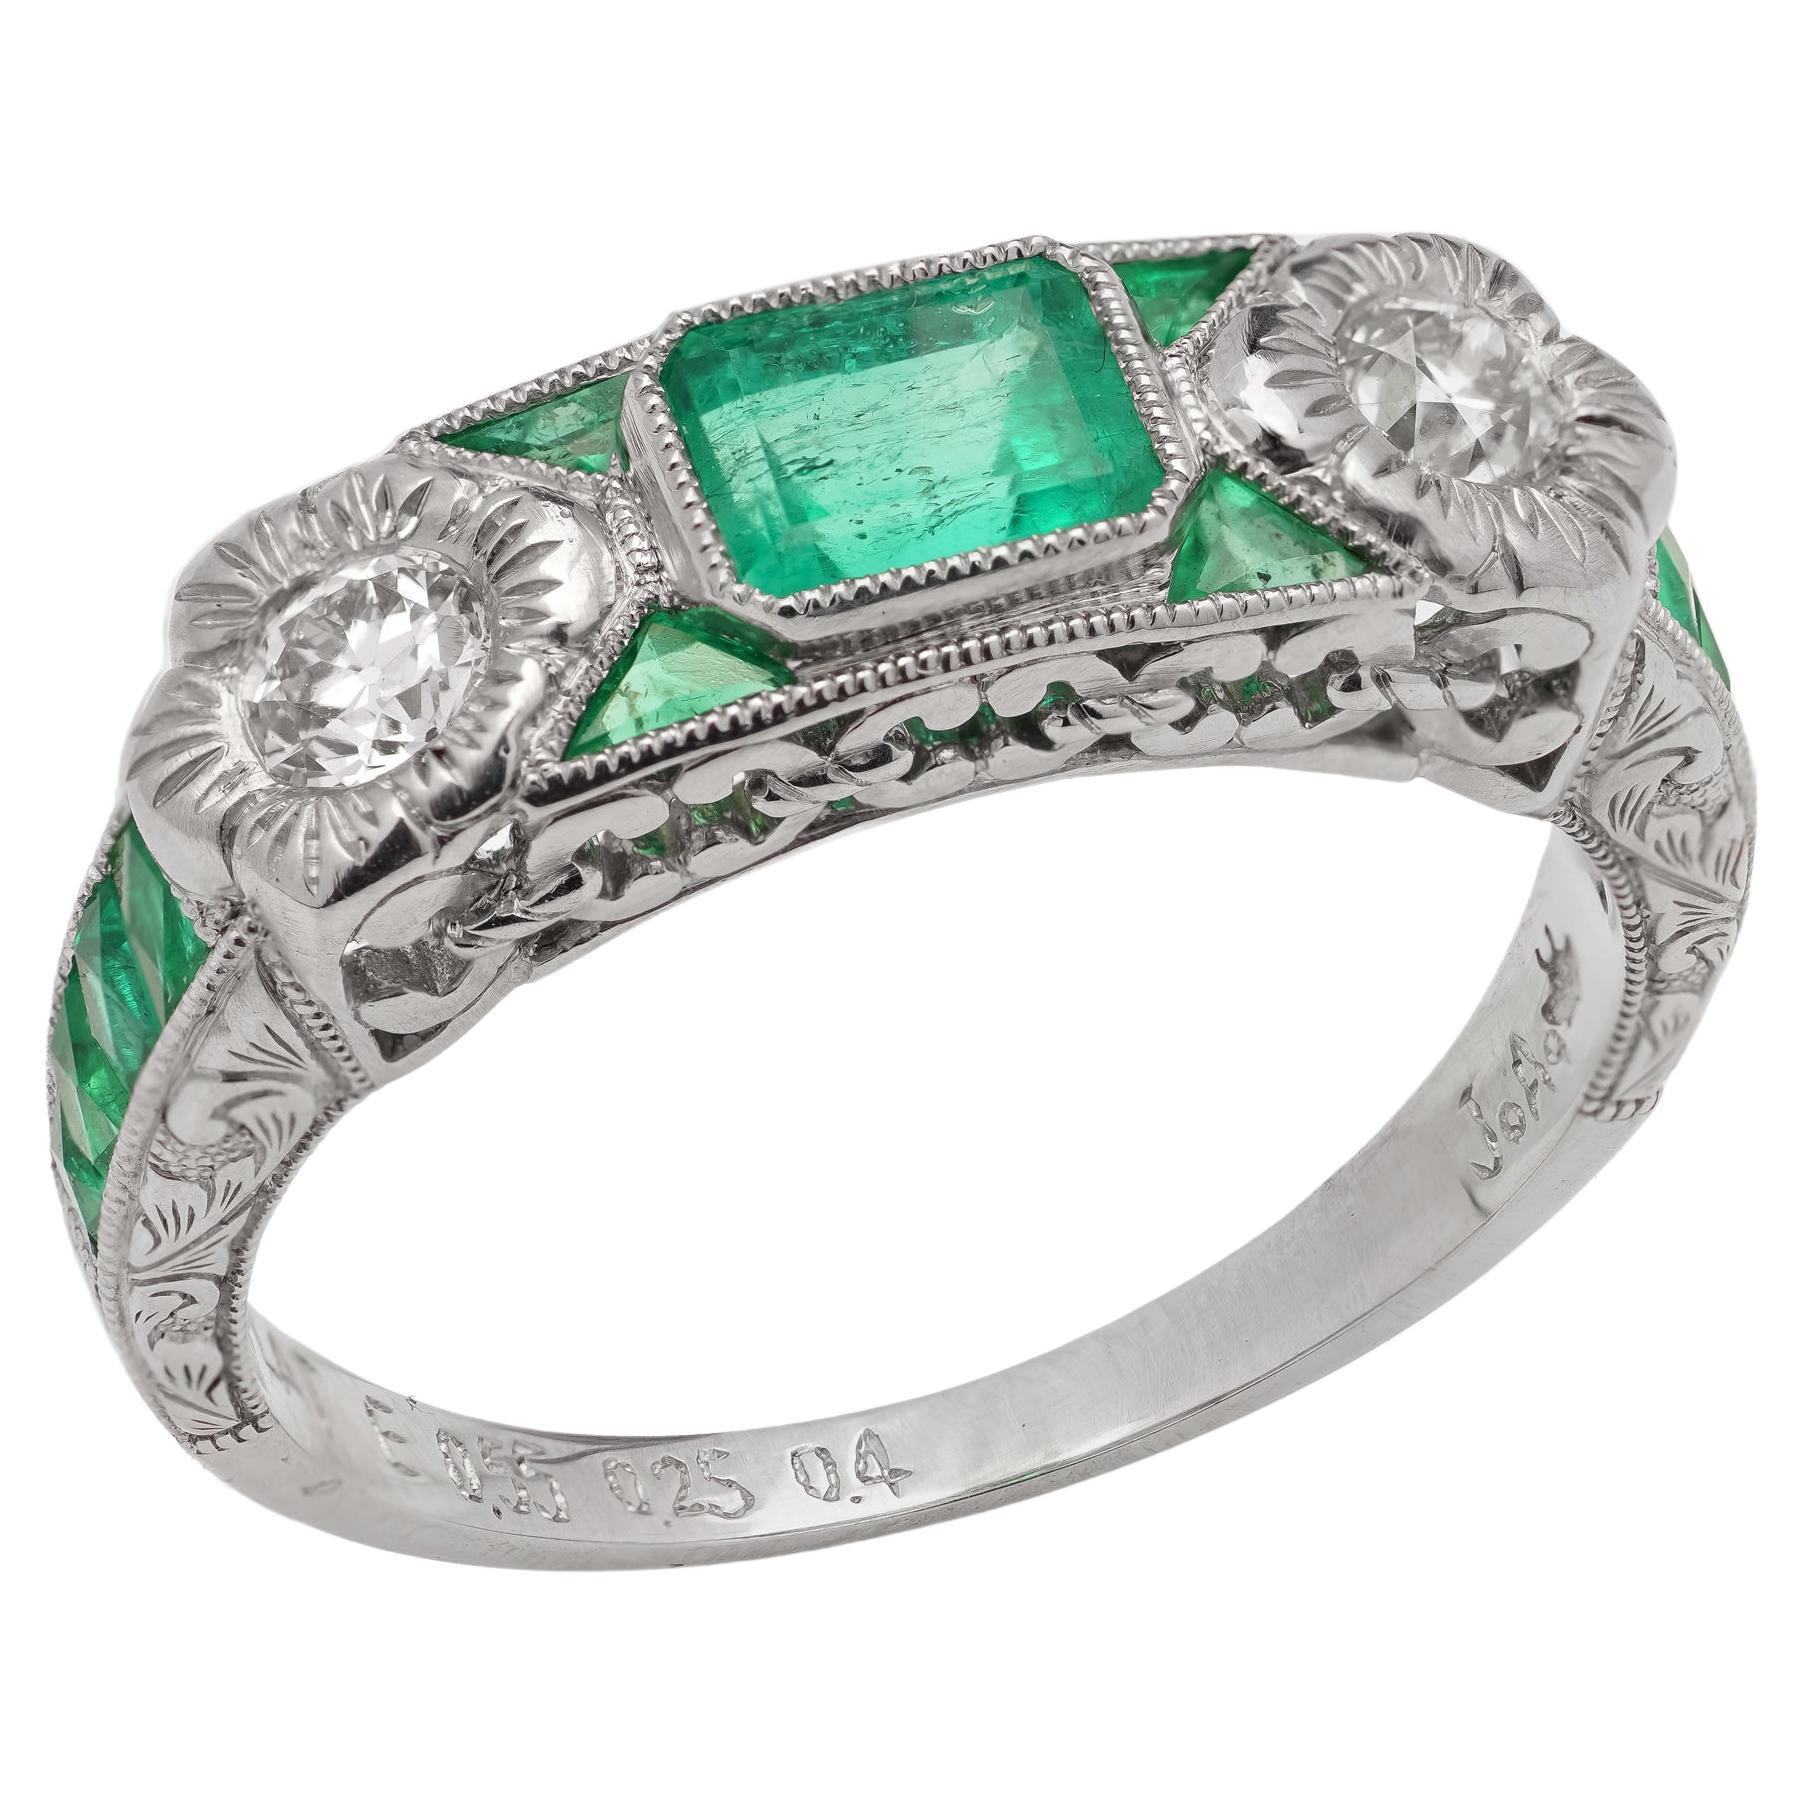 Platinum 0.55 carats of Emerald - cut Emerald ring For Sale